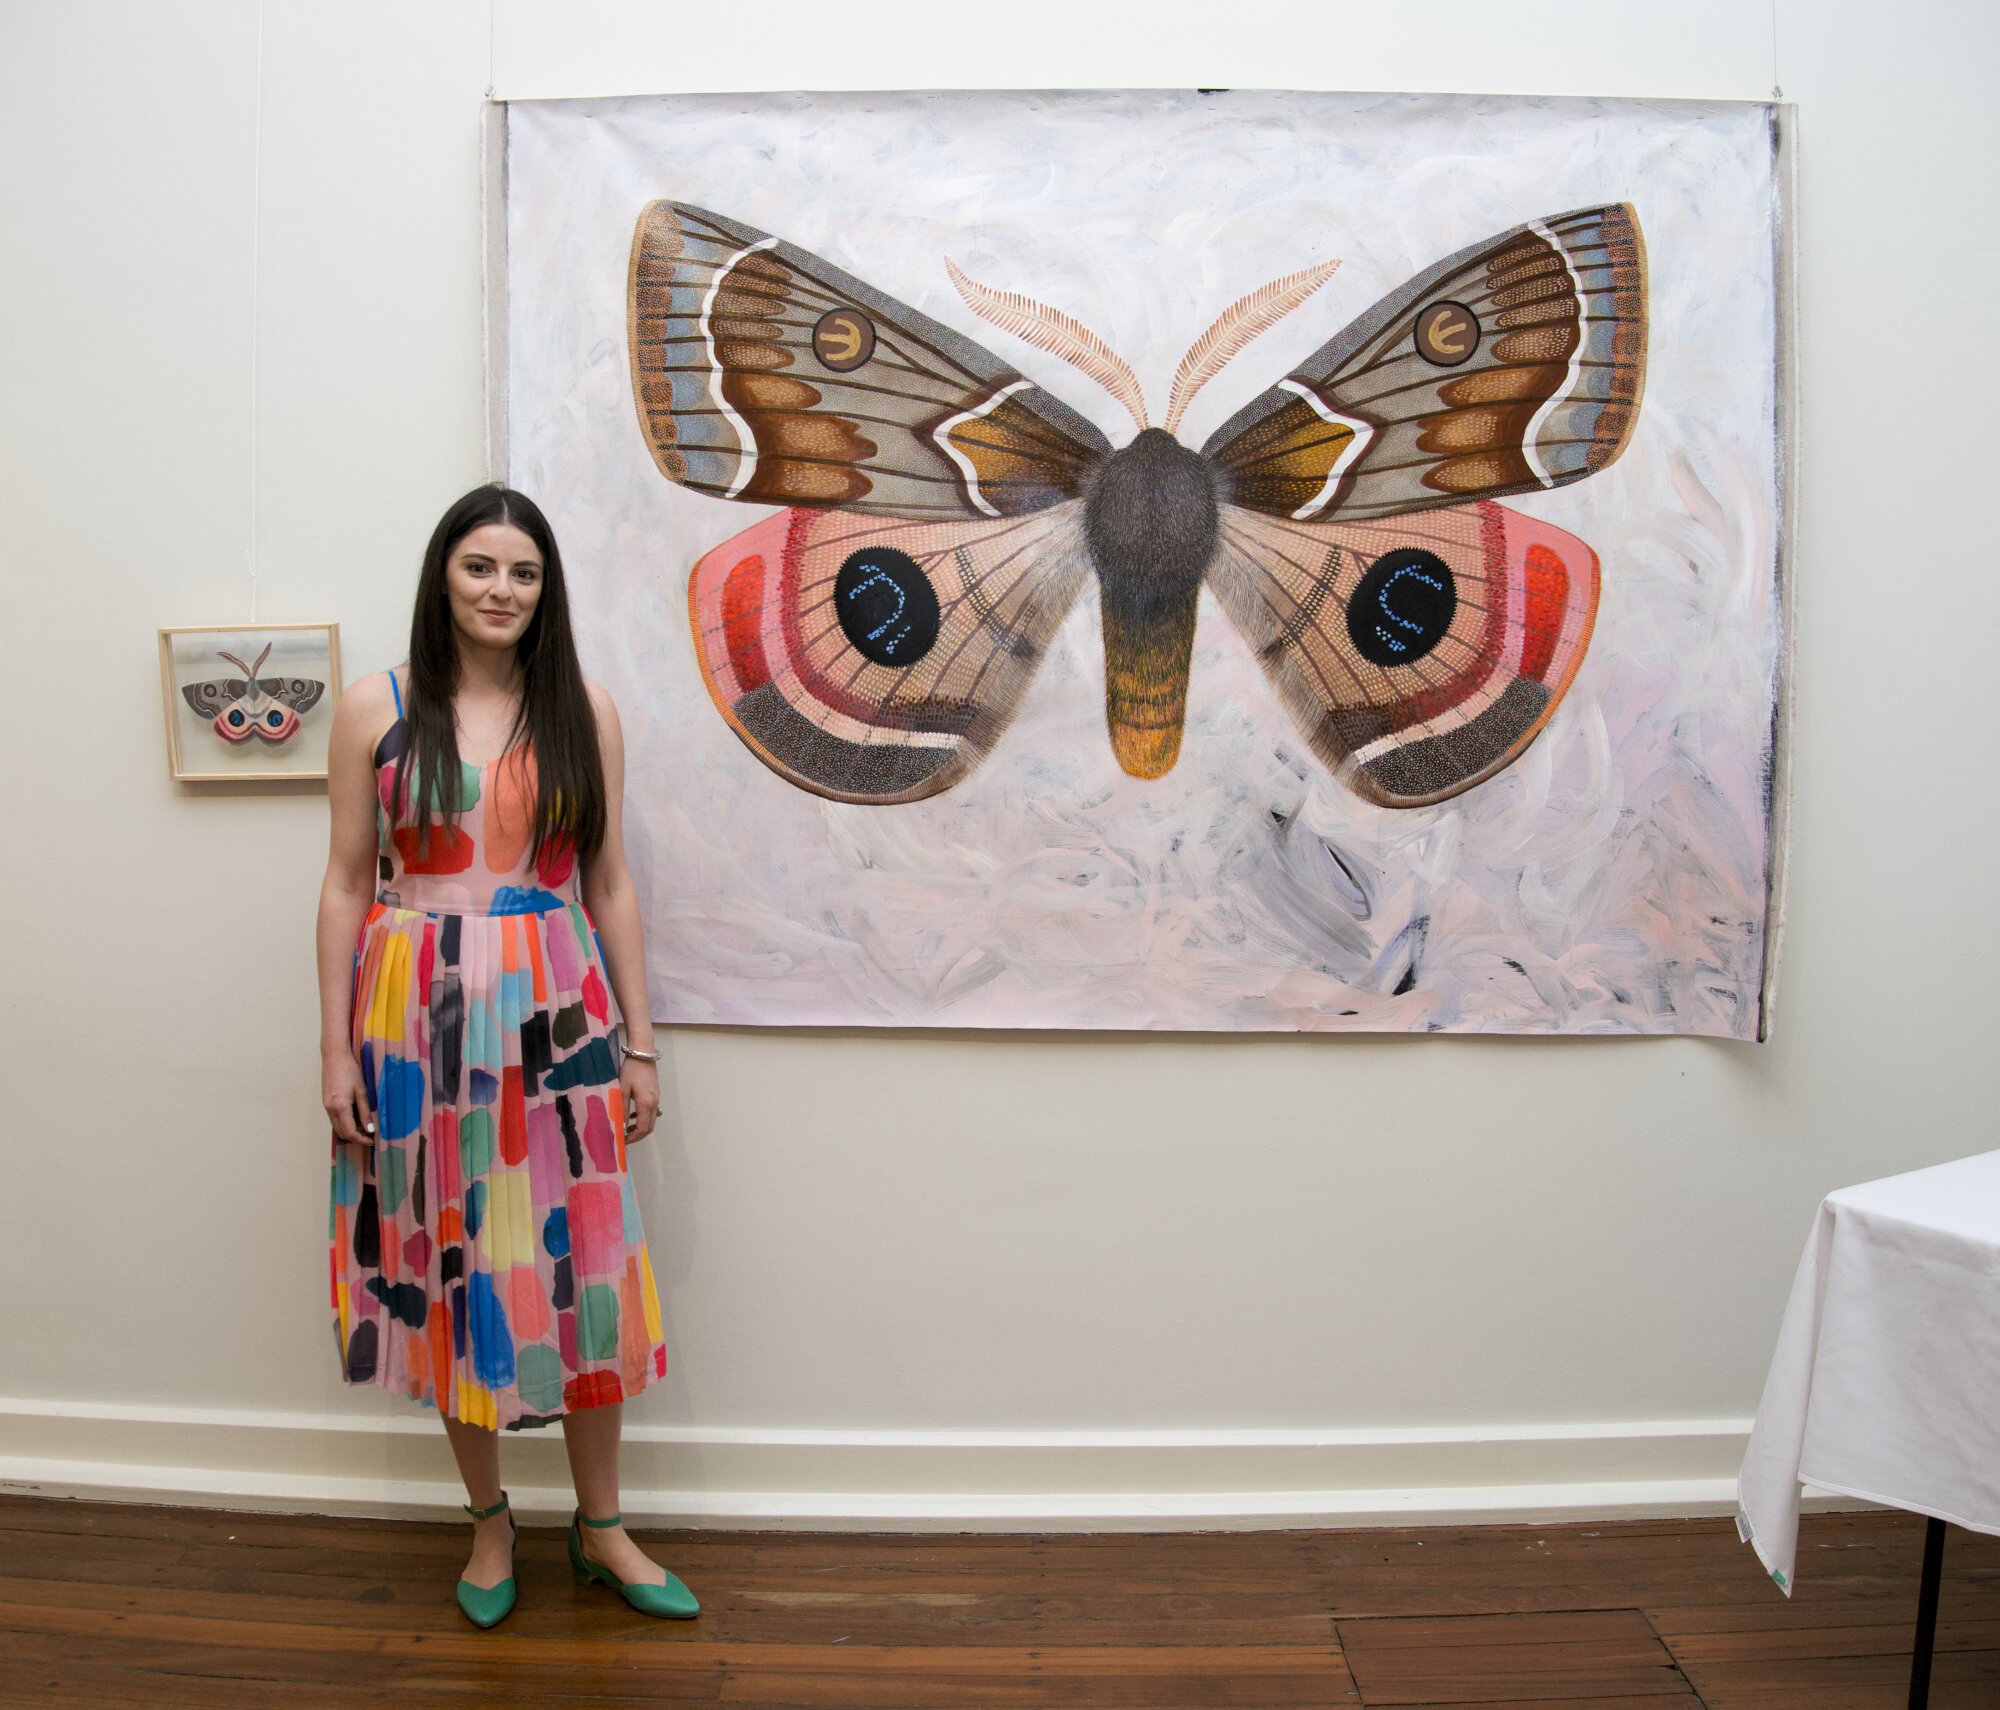 Chelsea Hopkins-Allen exhibition, ‘Moth’ at the Vancouver Arts Centre, February 2019